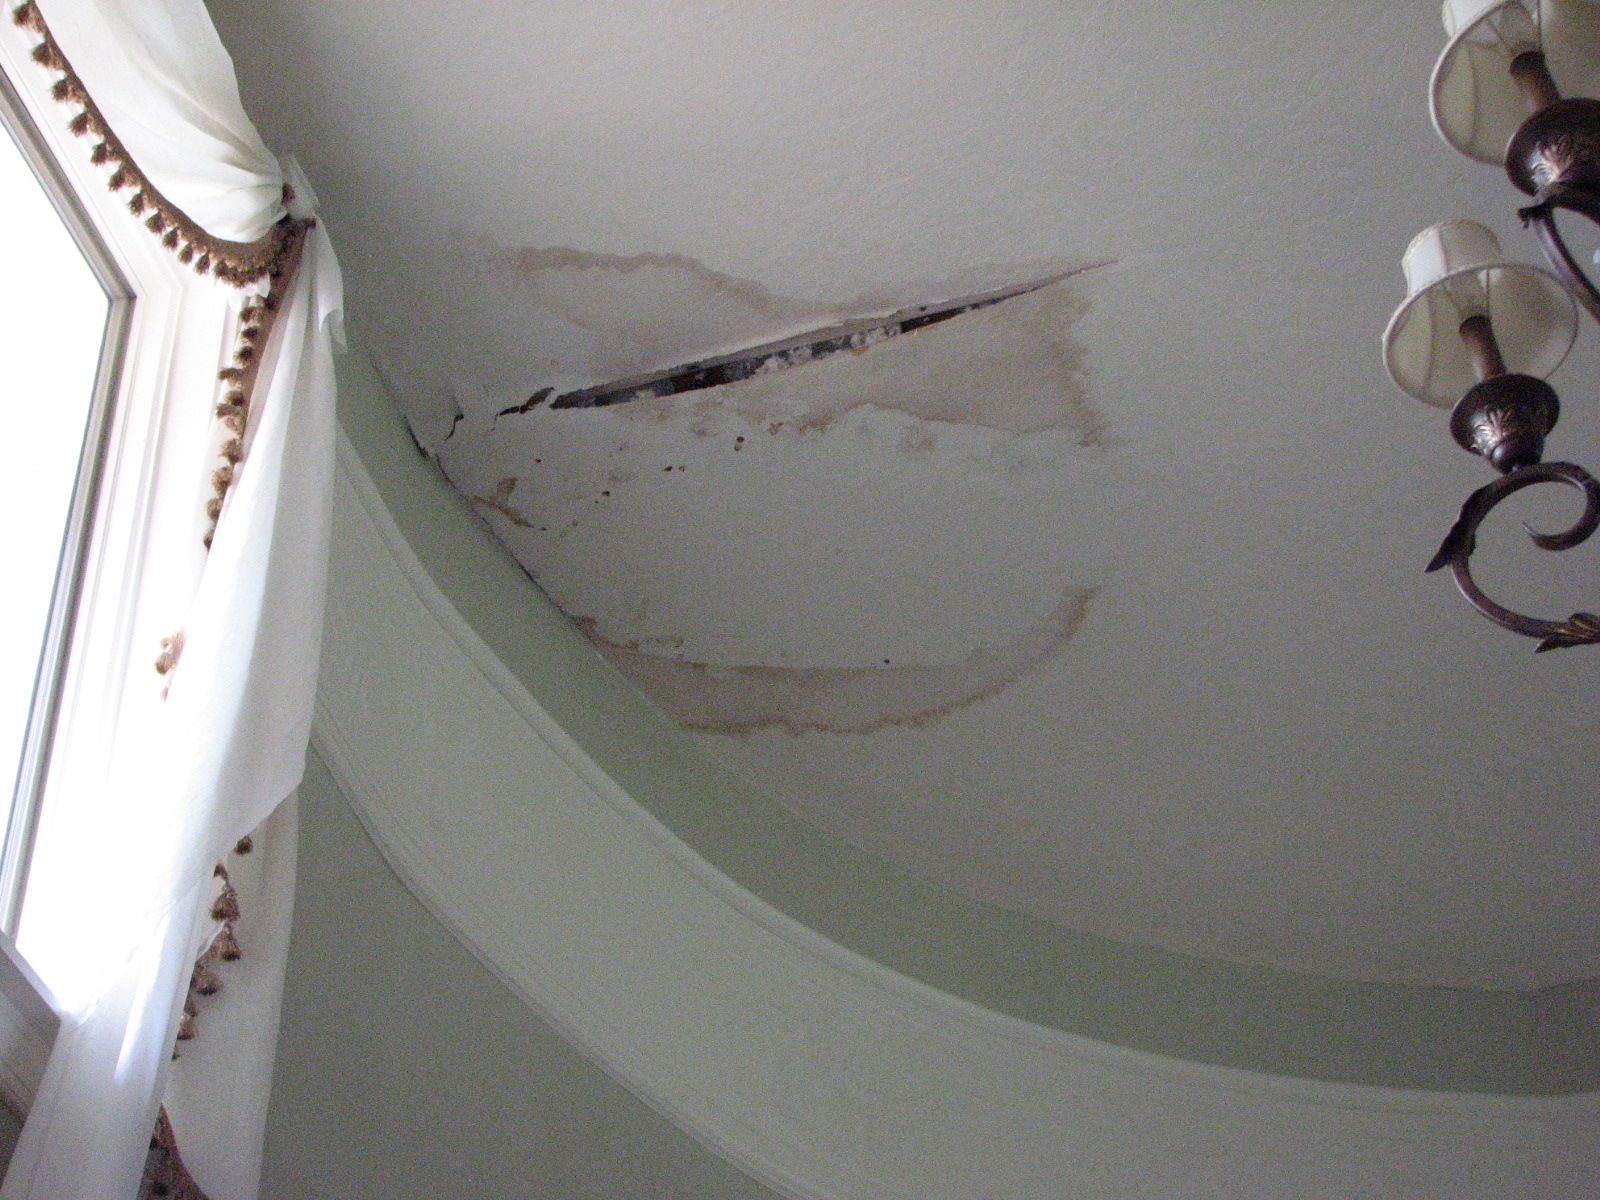 damaged ceiling drywall water repair damage repairs rain leak damp penetrating cracks roof ceilings trowel penetration causes restoration skip peckdrywallandpainting